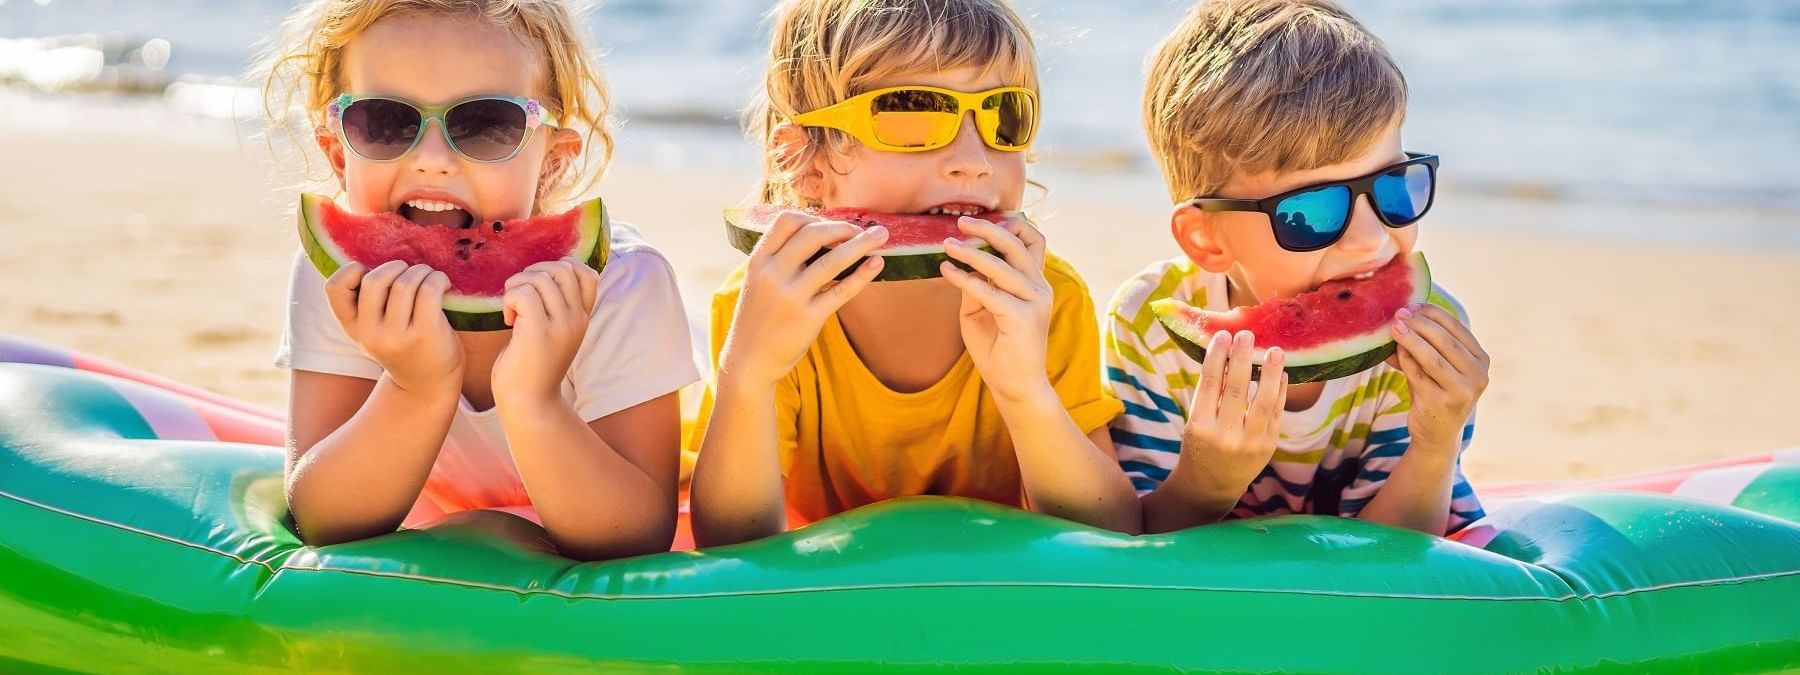 Kids eating watermelon on beach at Daydream Island Resort